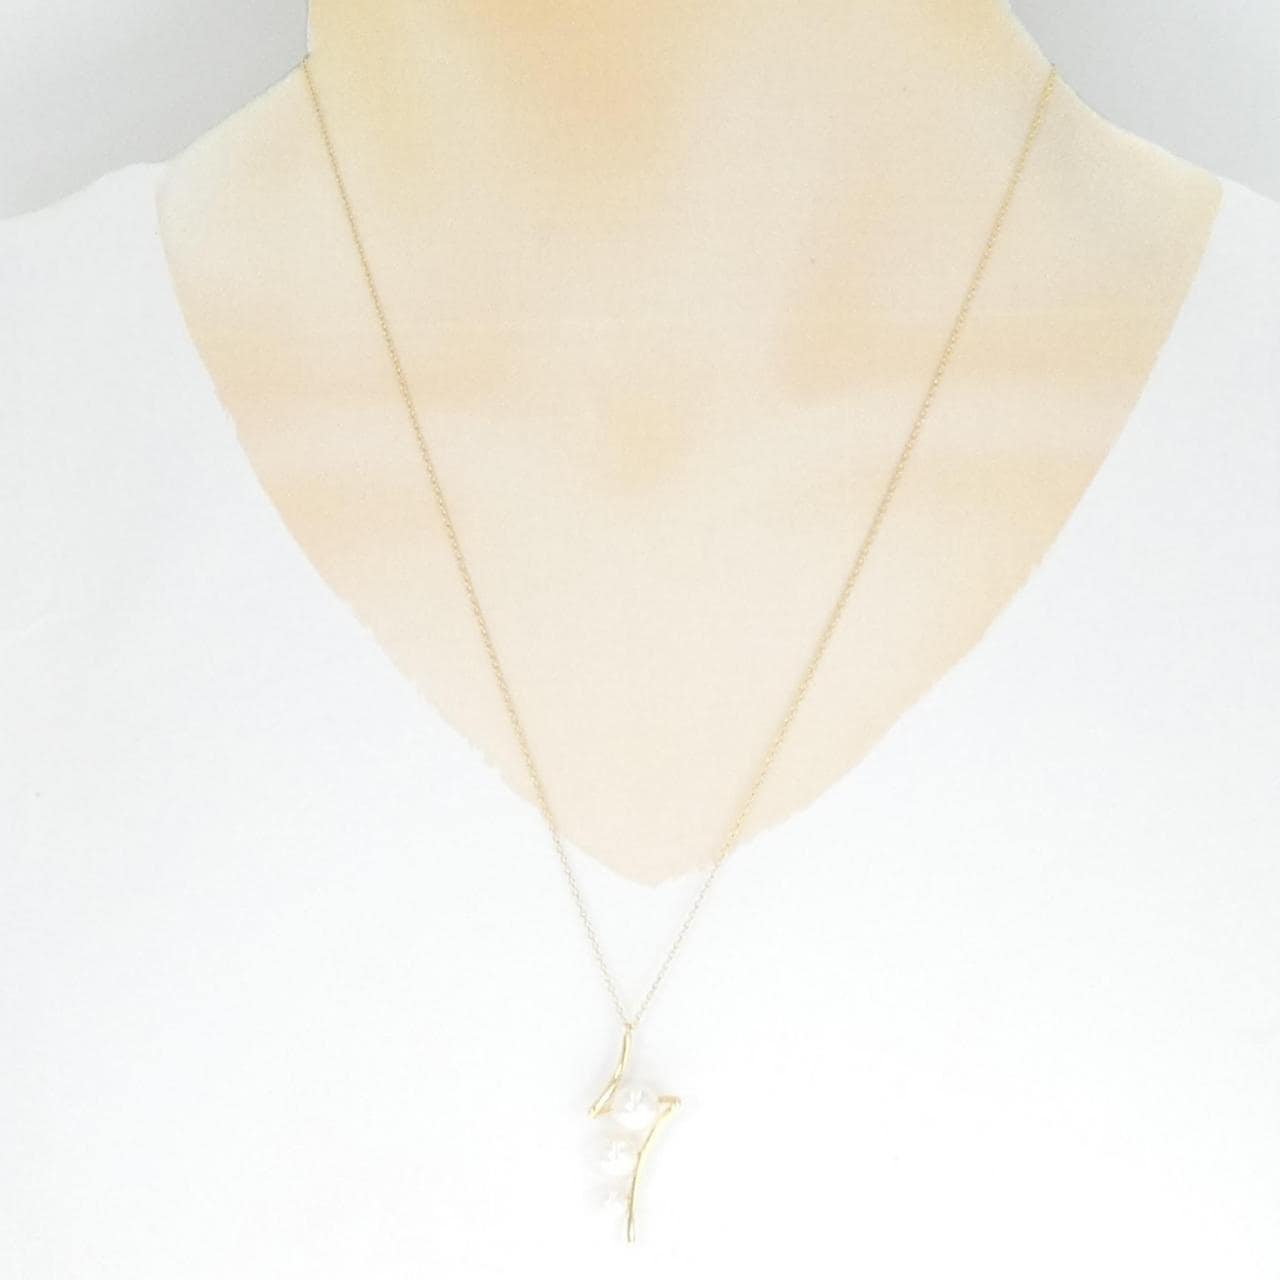 Tasaki Akoya pearl necklace